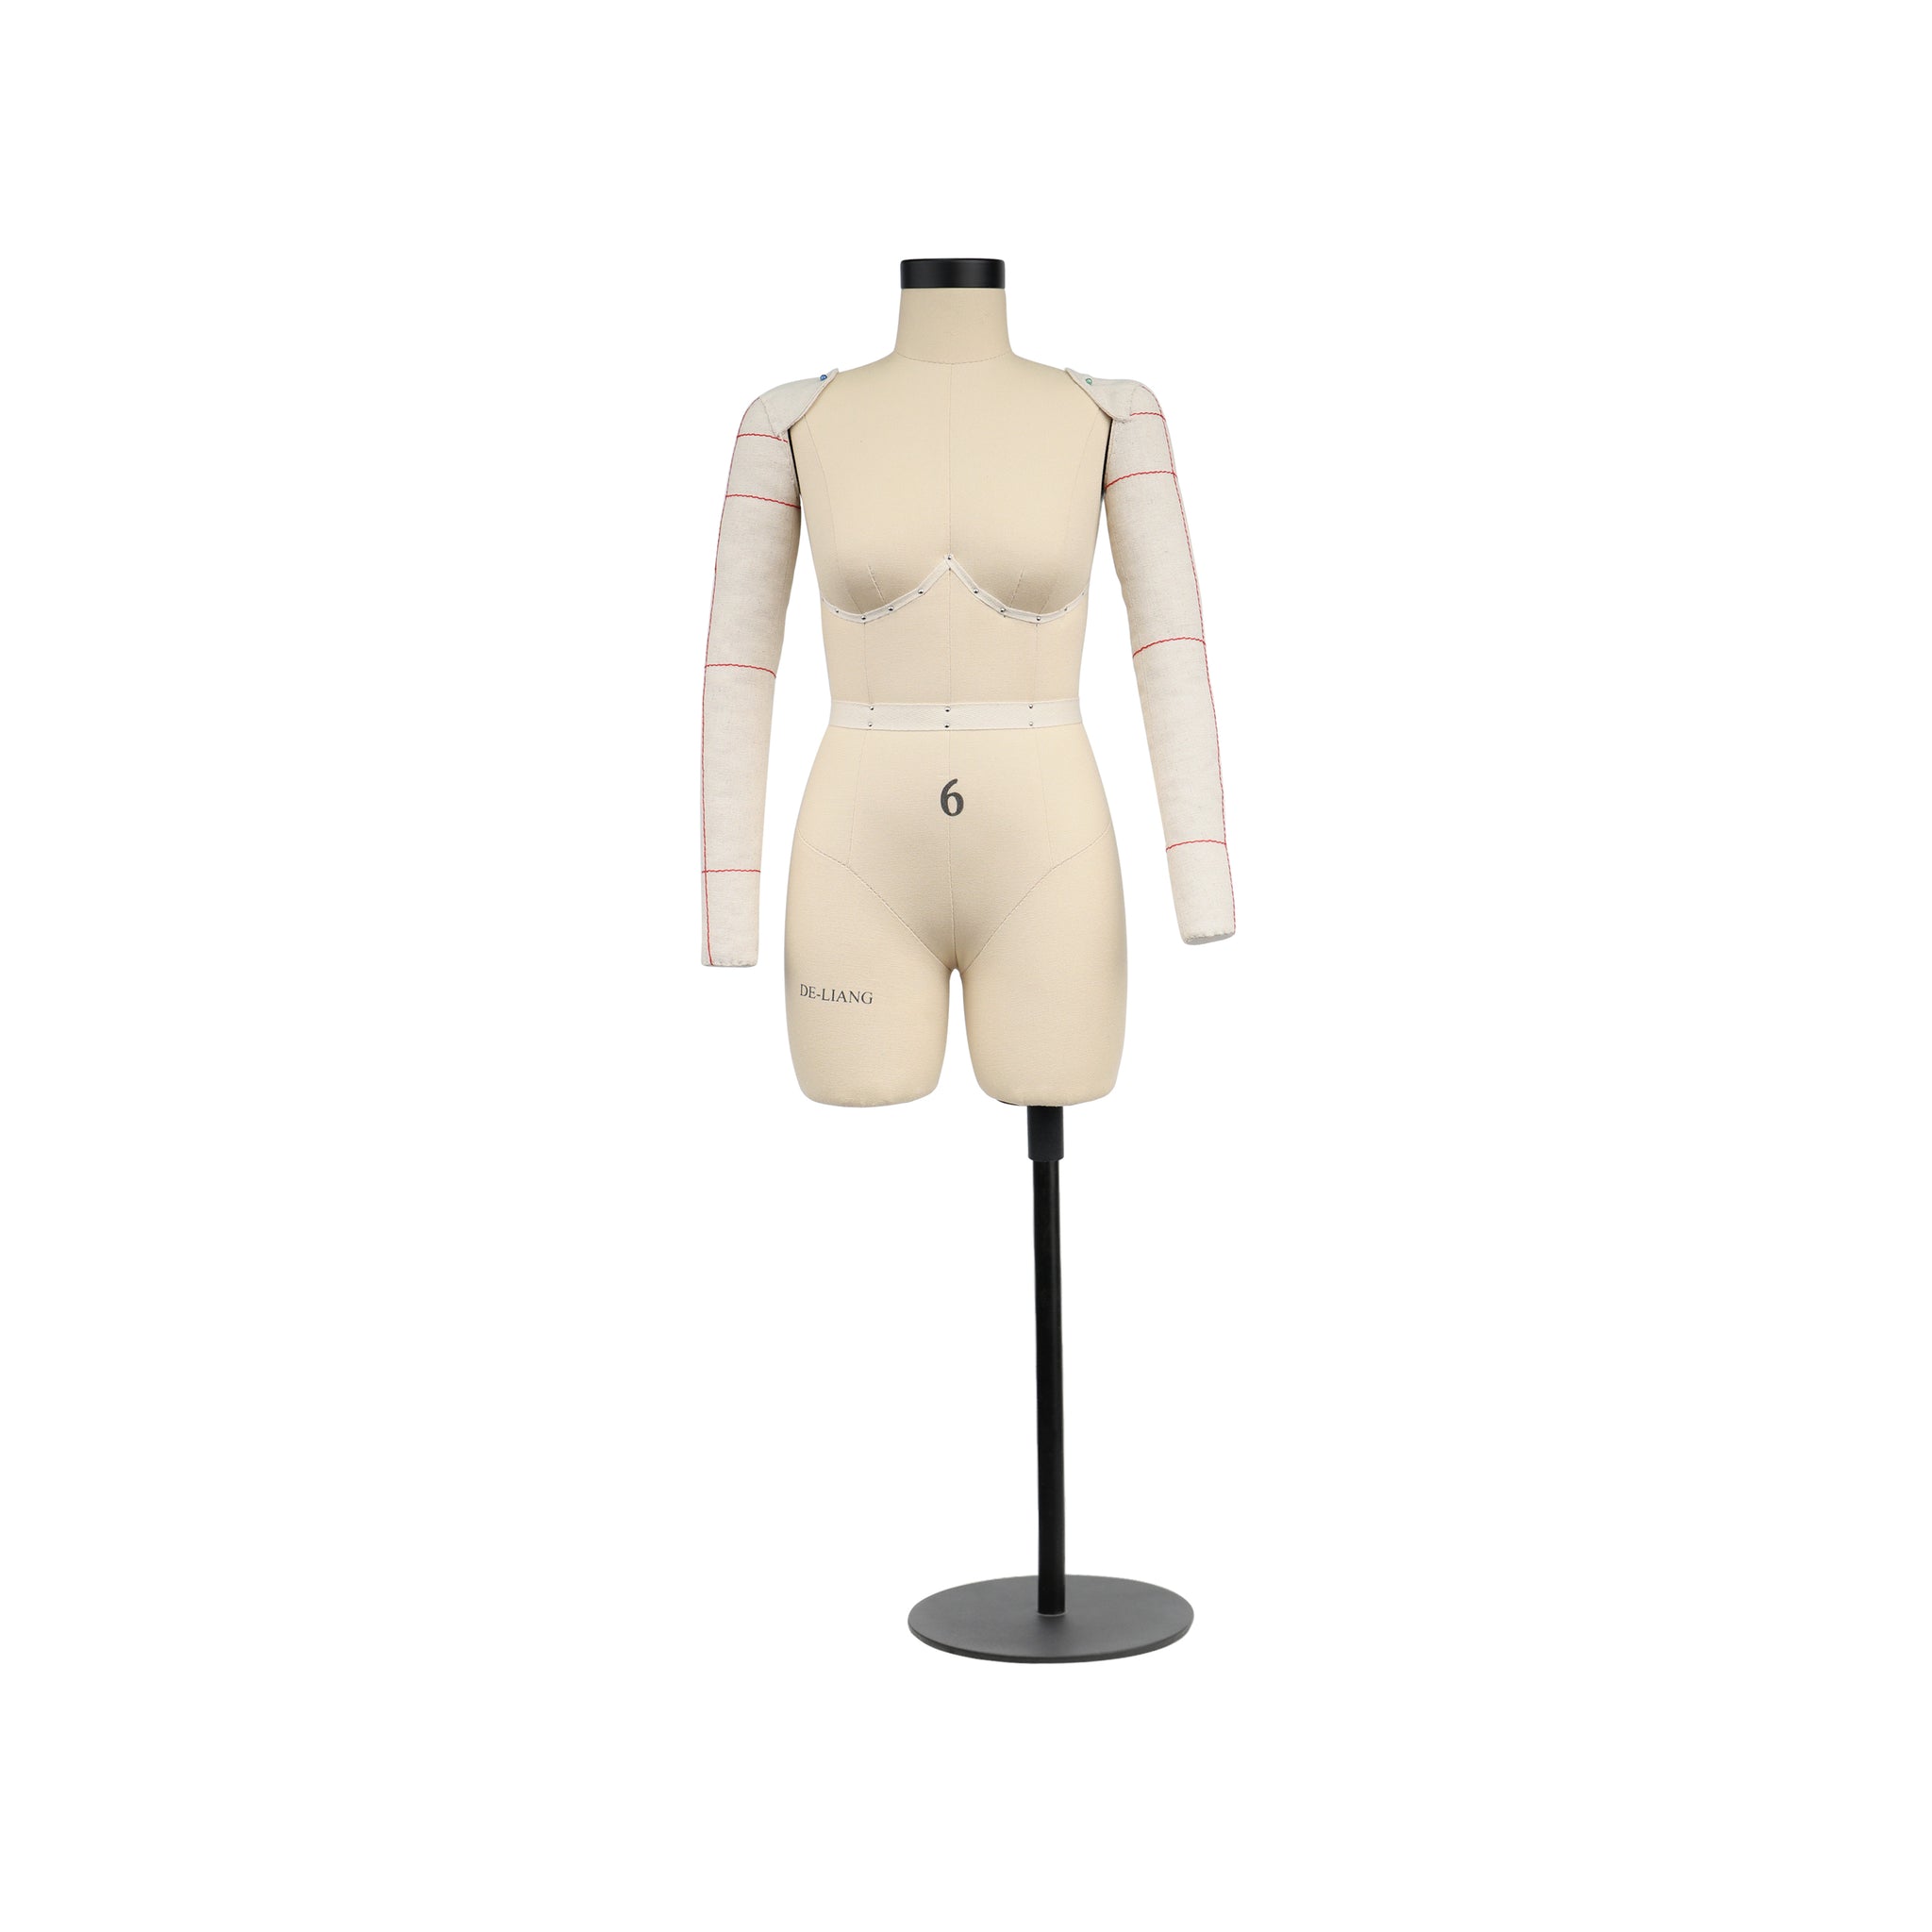 Clothing Store Fabric Mannequin Torso Female,half Body Grey Linen Dress  Form Display Body,clothing Dress Form Manikin Head Display Dummy 